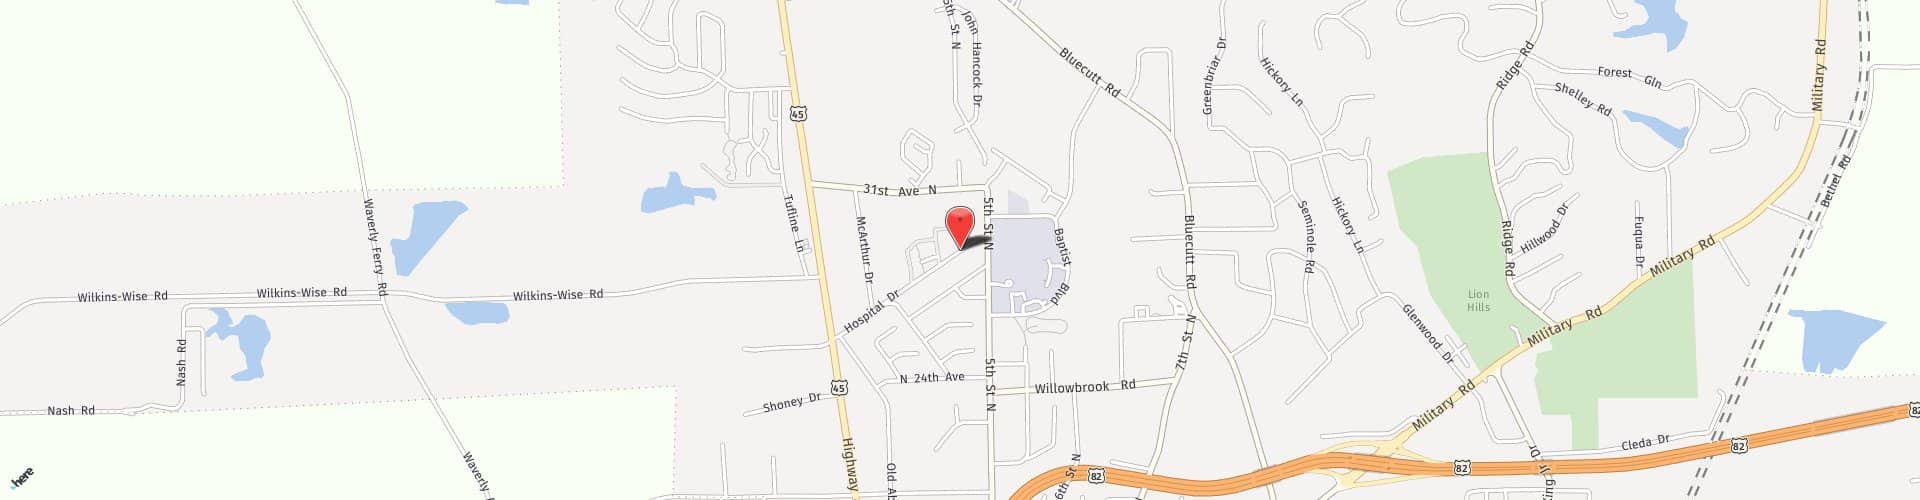 Location Map: 425 Hospital Dr. Columbus, MS 39705